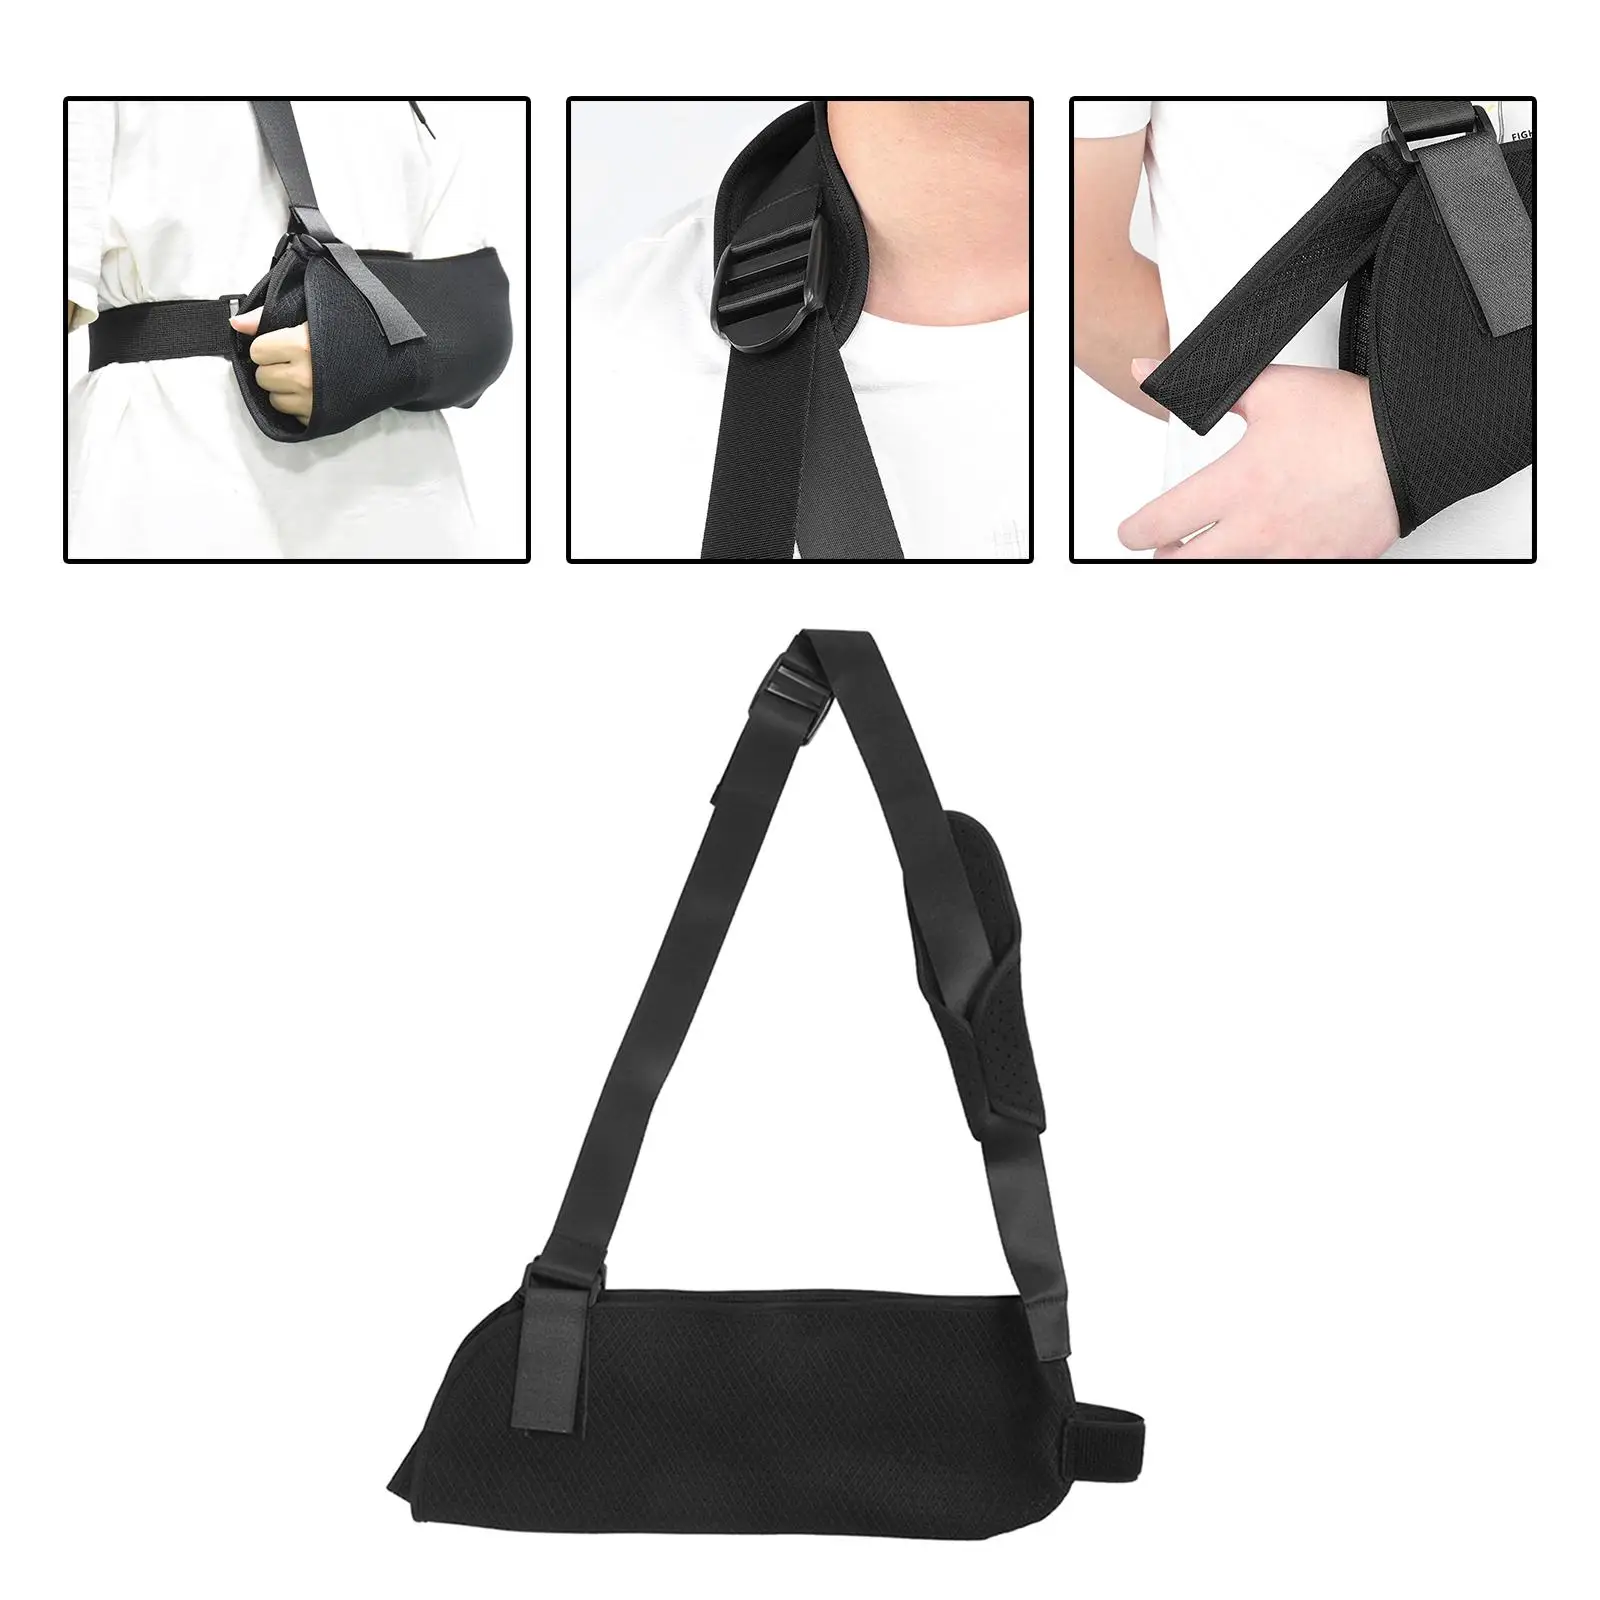 Arm Support Strap Breathable Comfortable Adjustable Lightweight for Arm Shoulder Immobilizer Wrist Elbow Support for Men Women